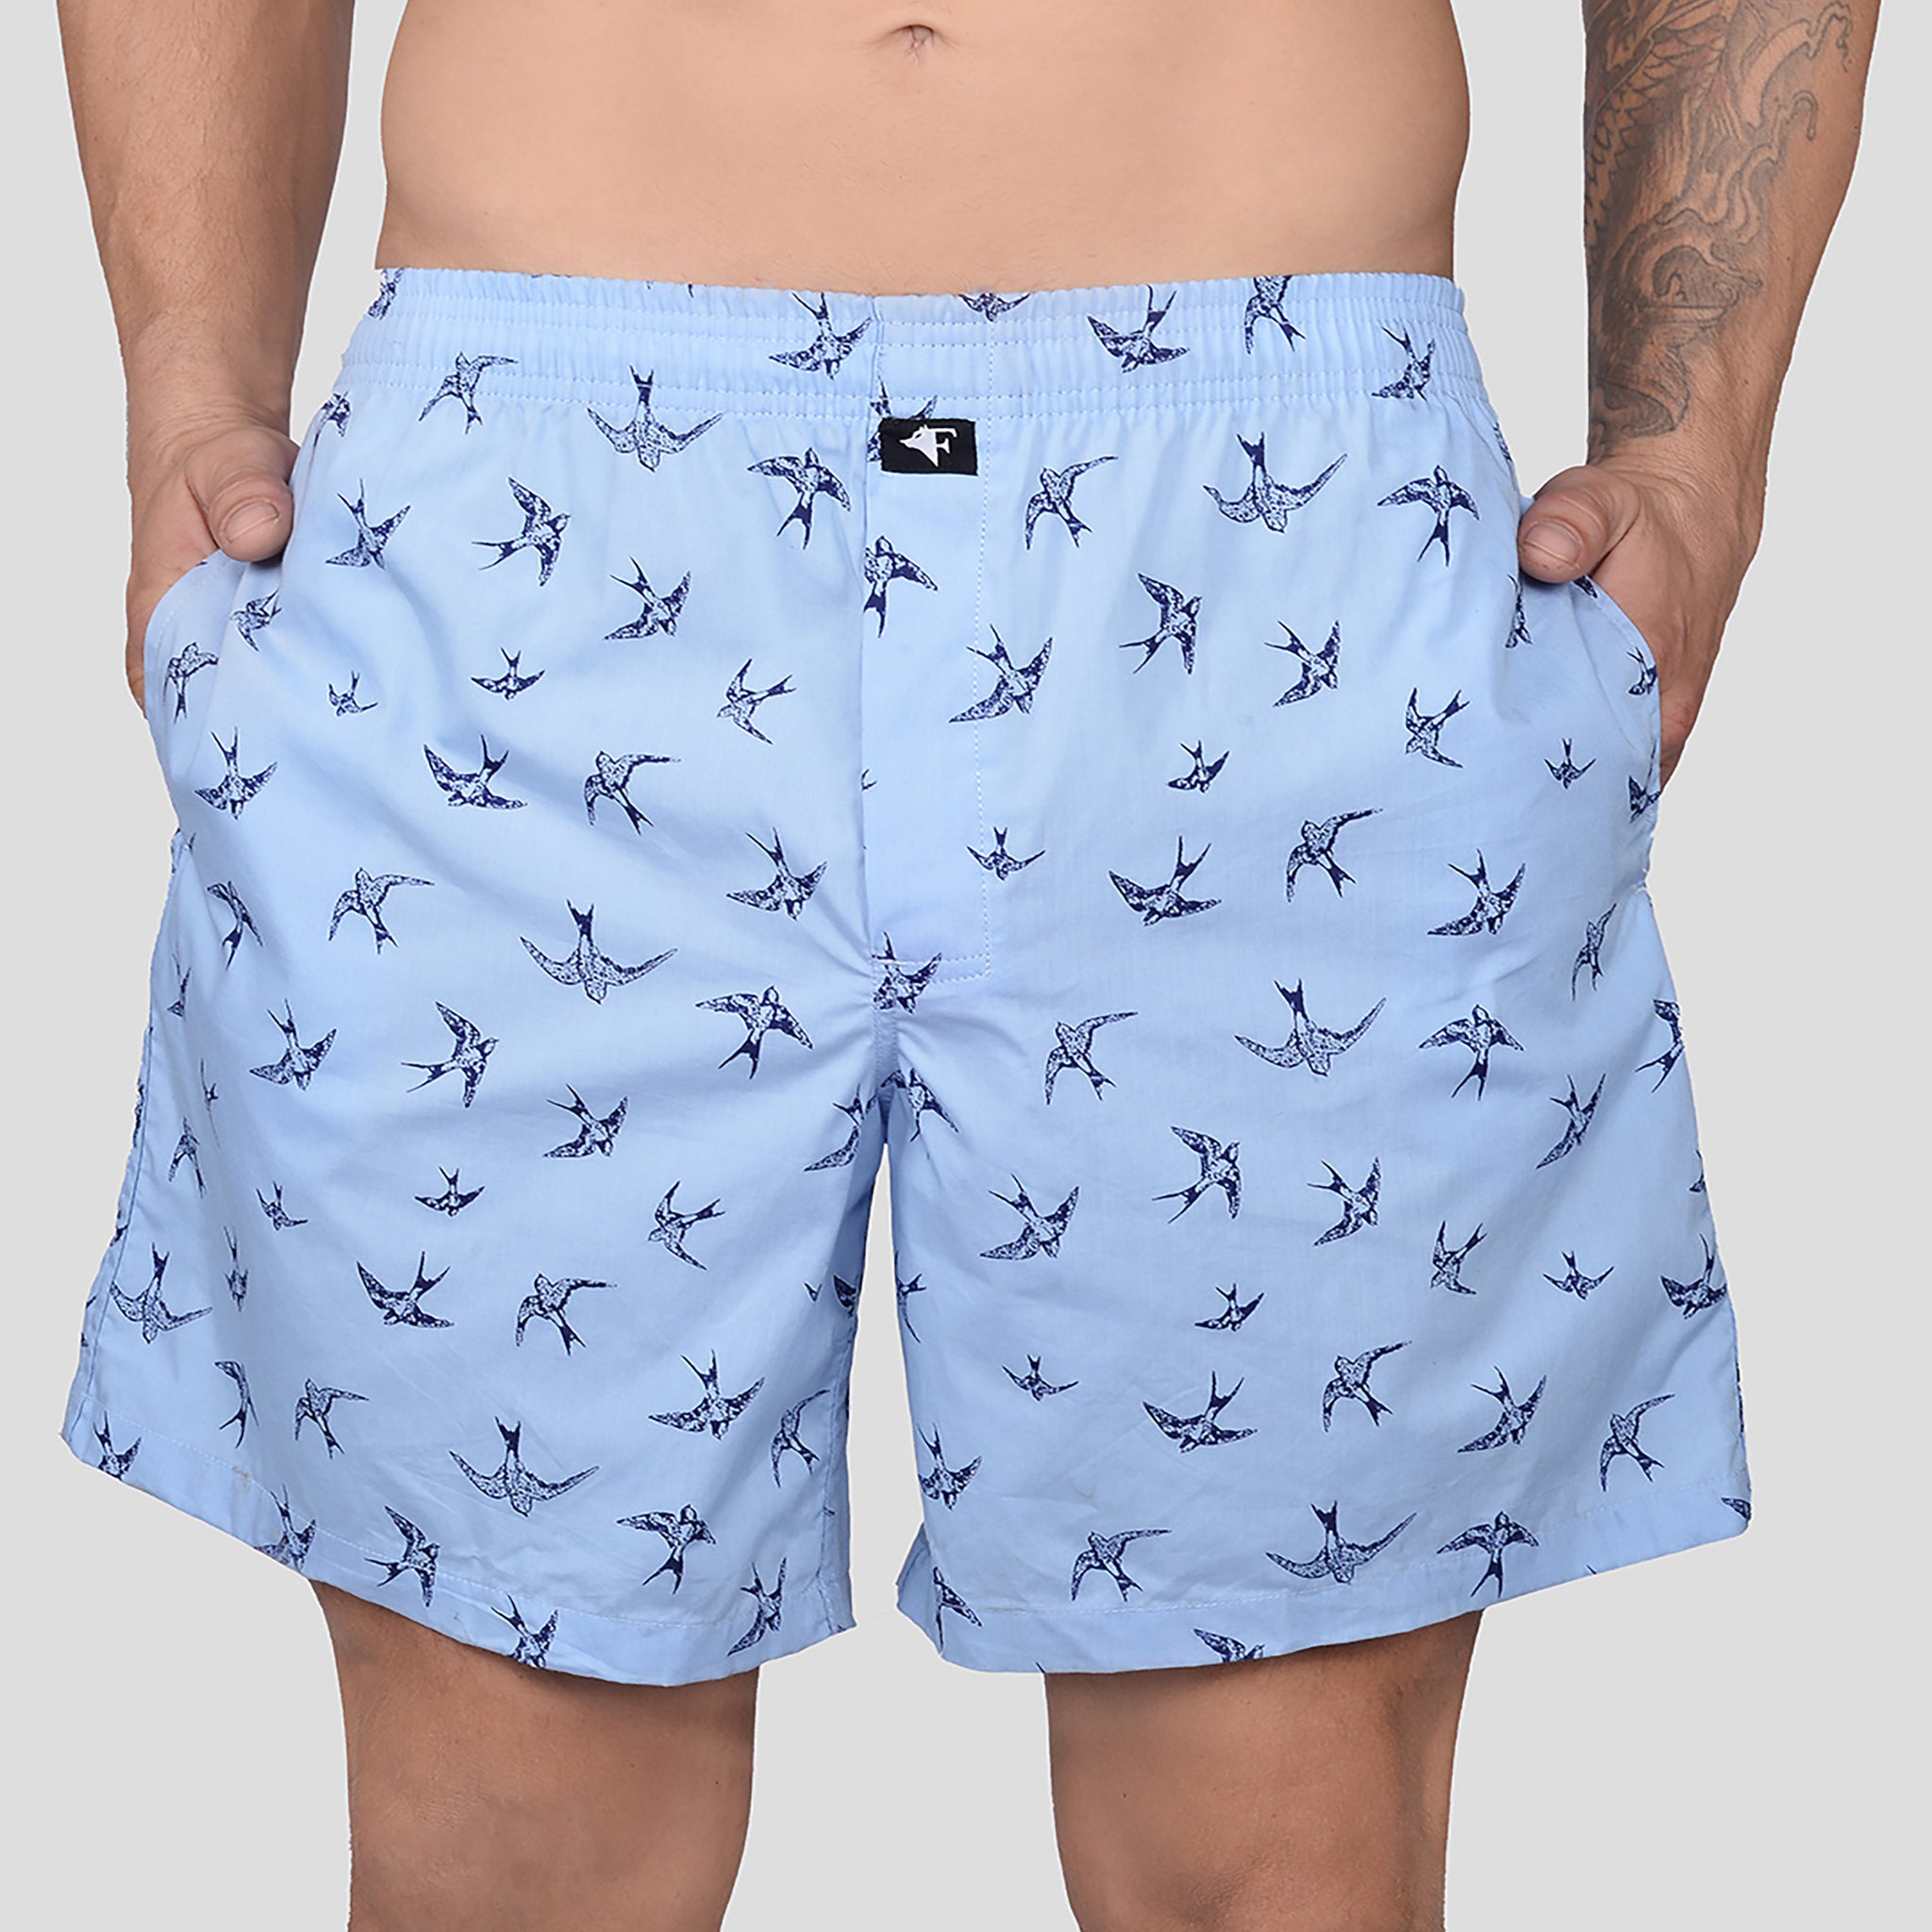 BOKSA Men's Printed Cotton Boxer Shorts with Side Pockets - Sky Blue Bird